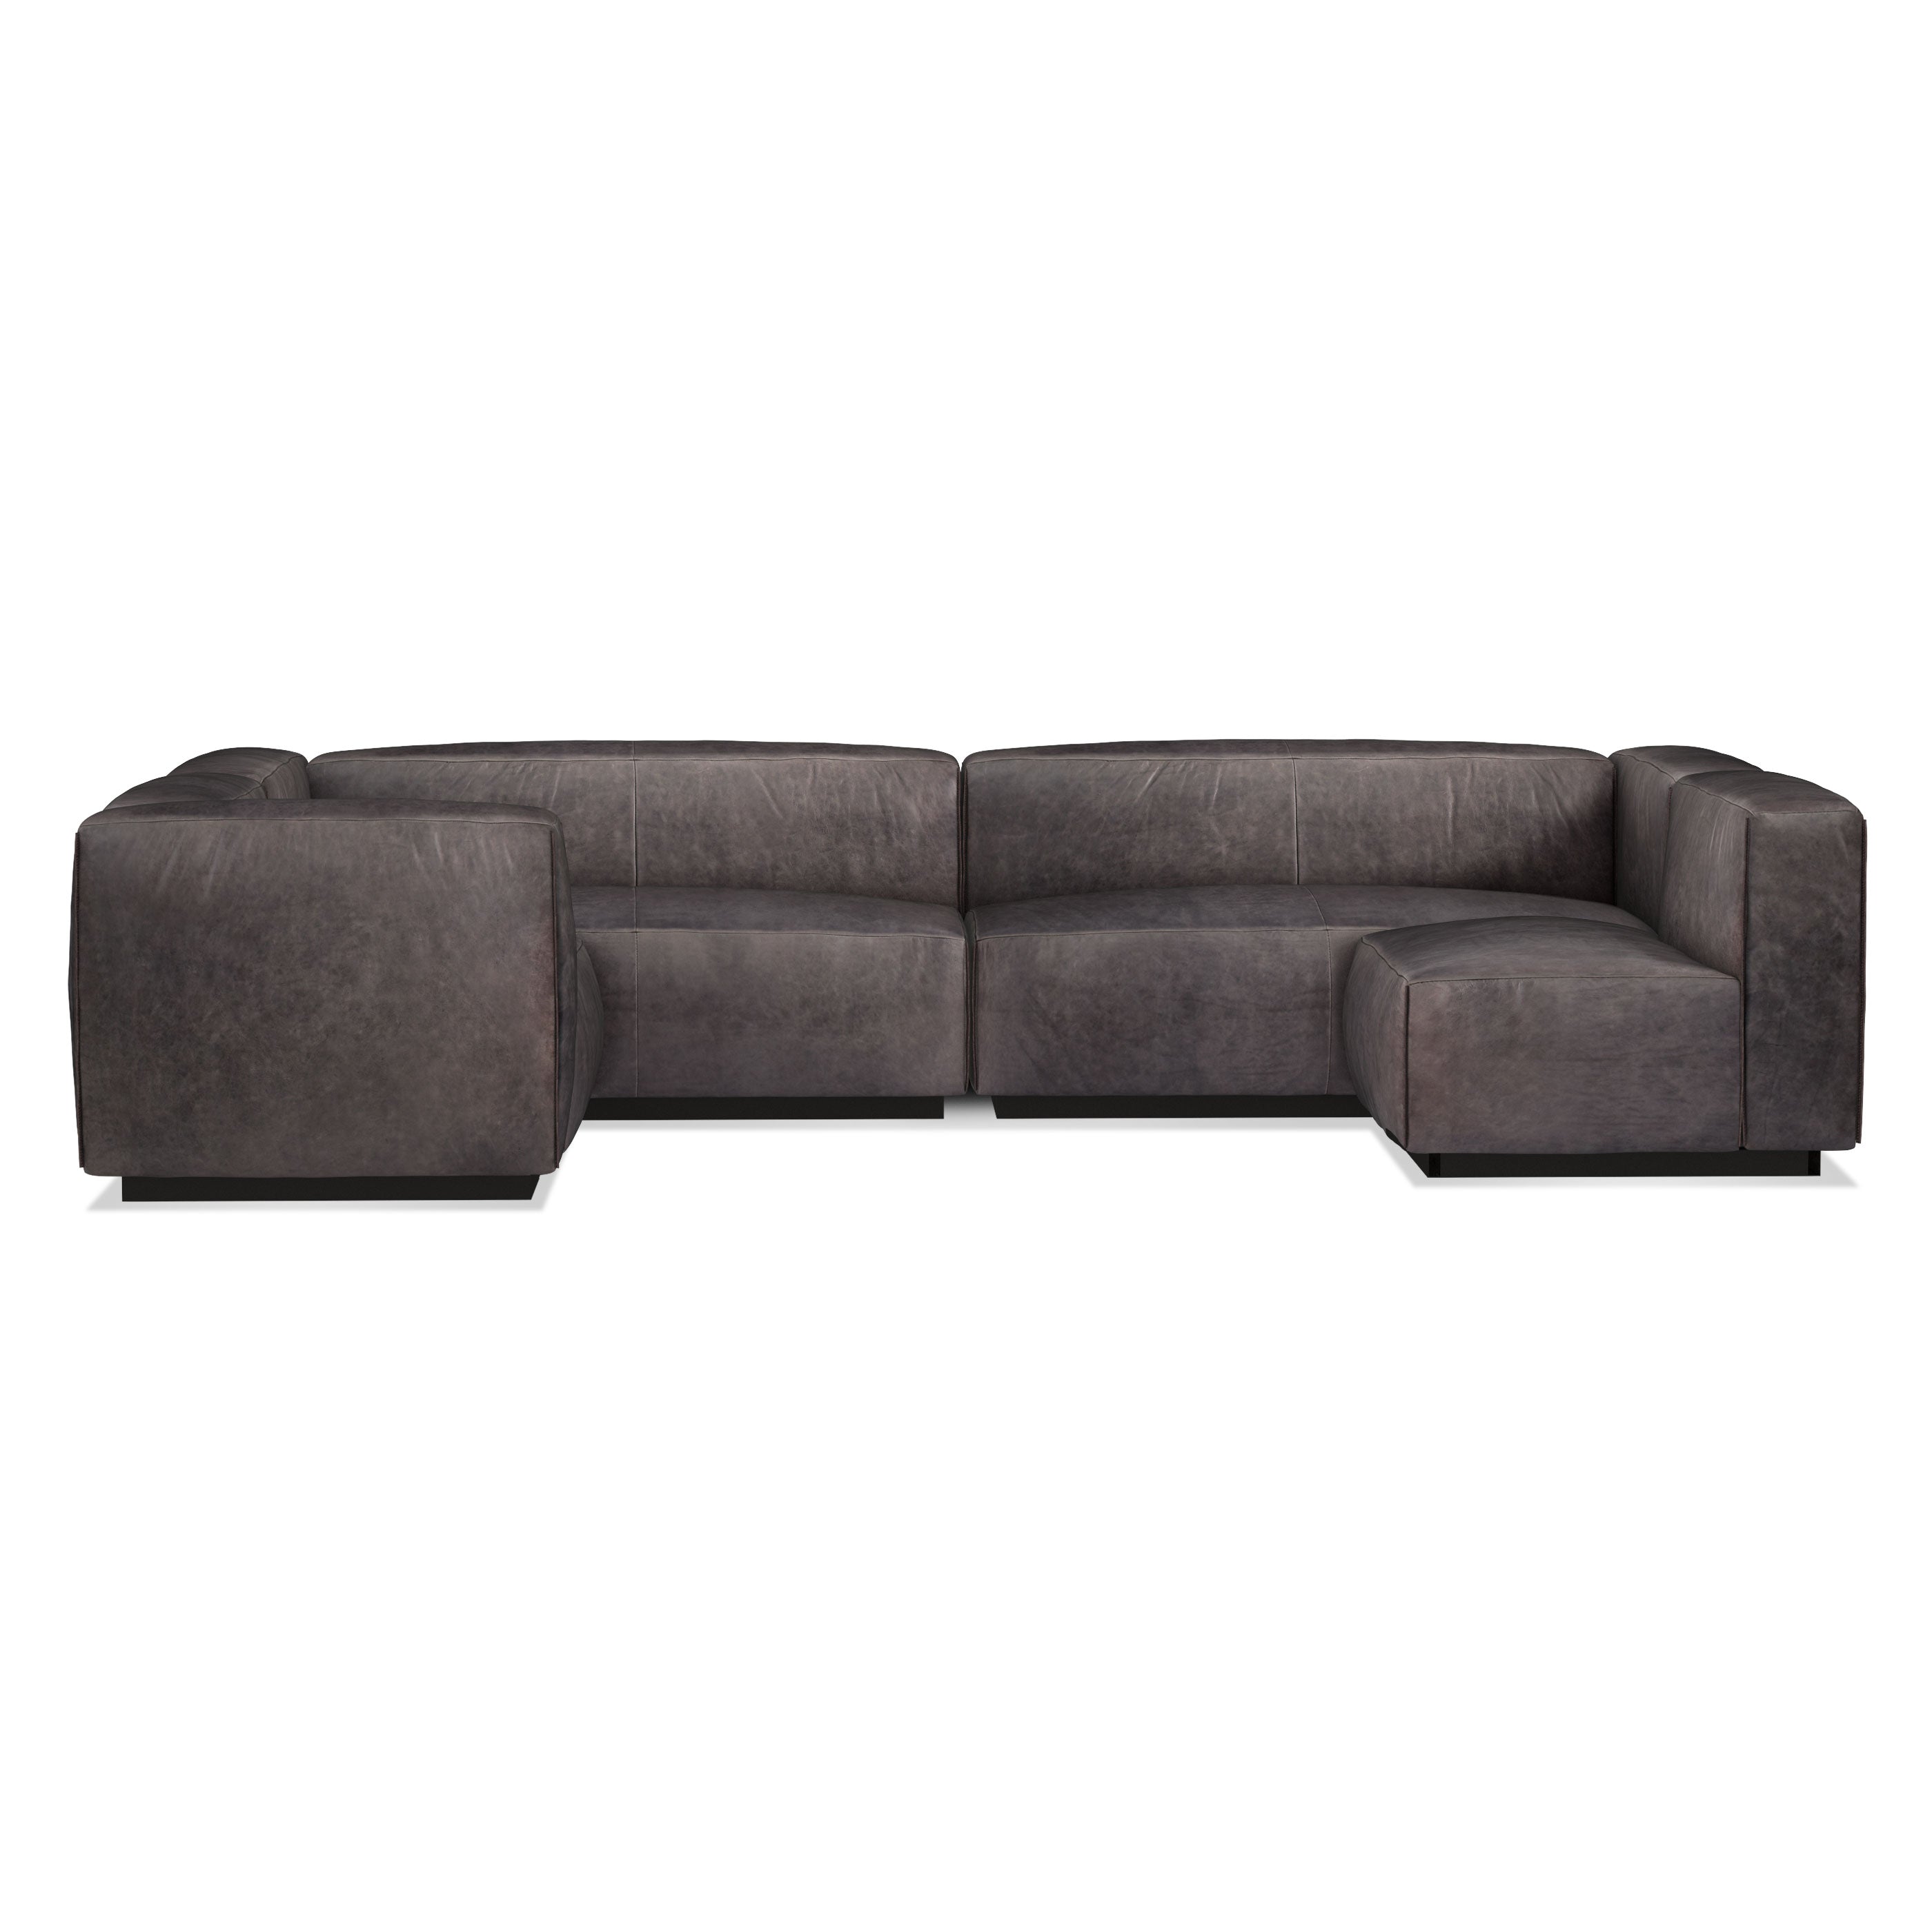 Cleon Large Leather Modular Sectional Sofa